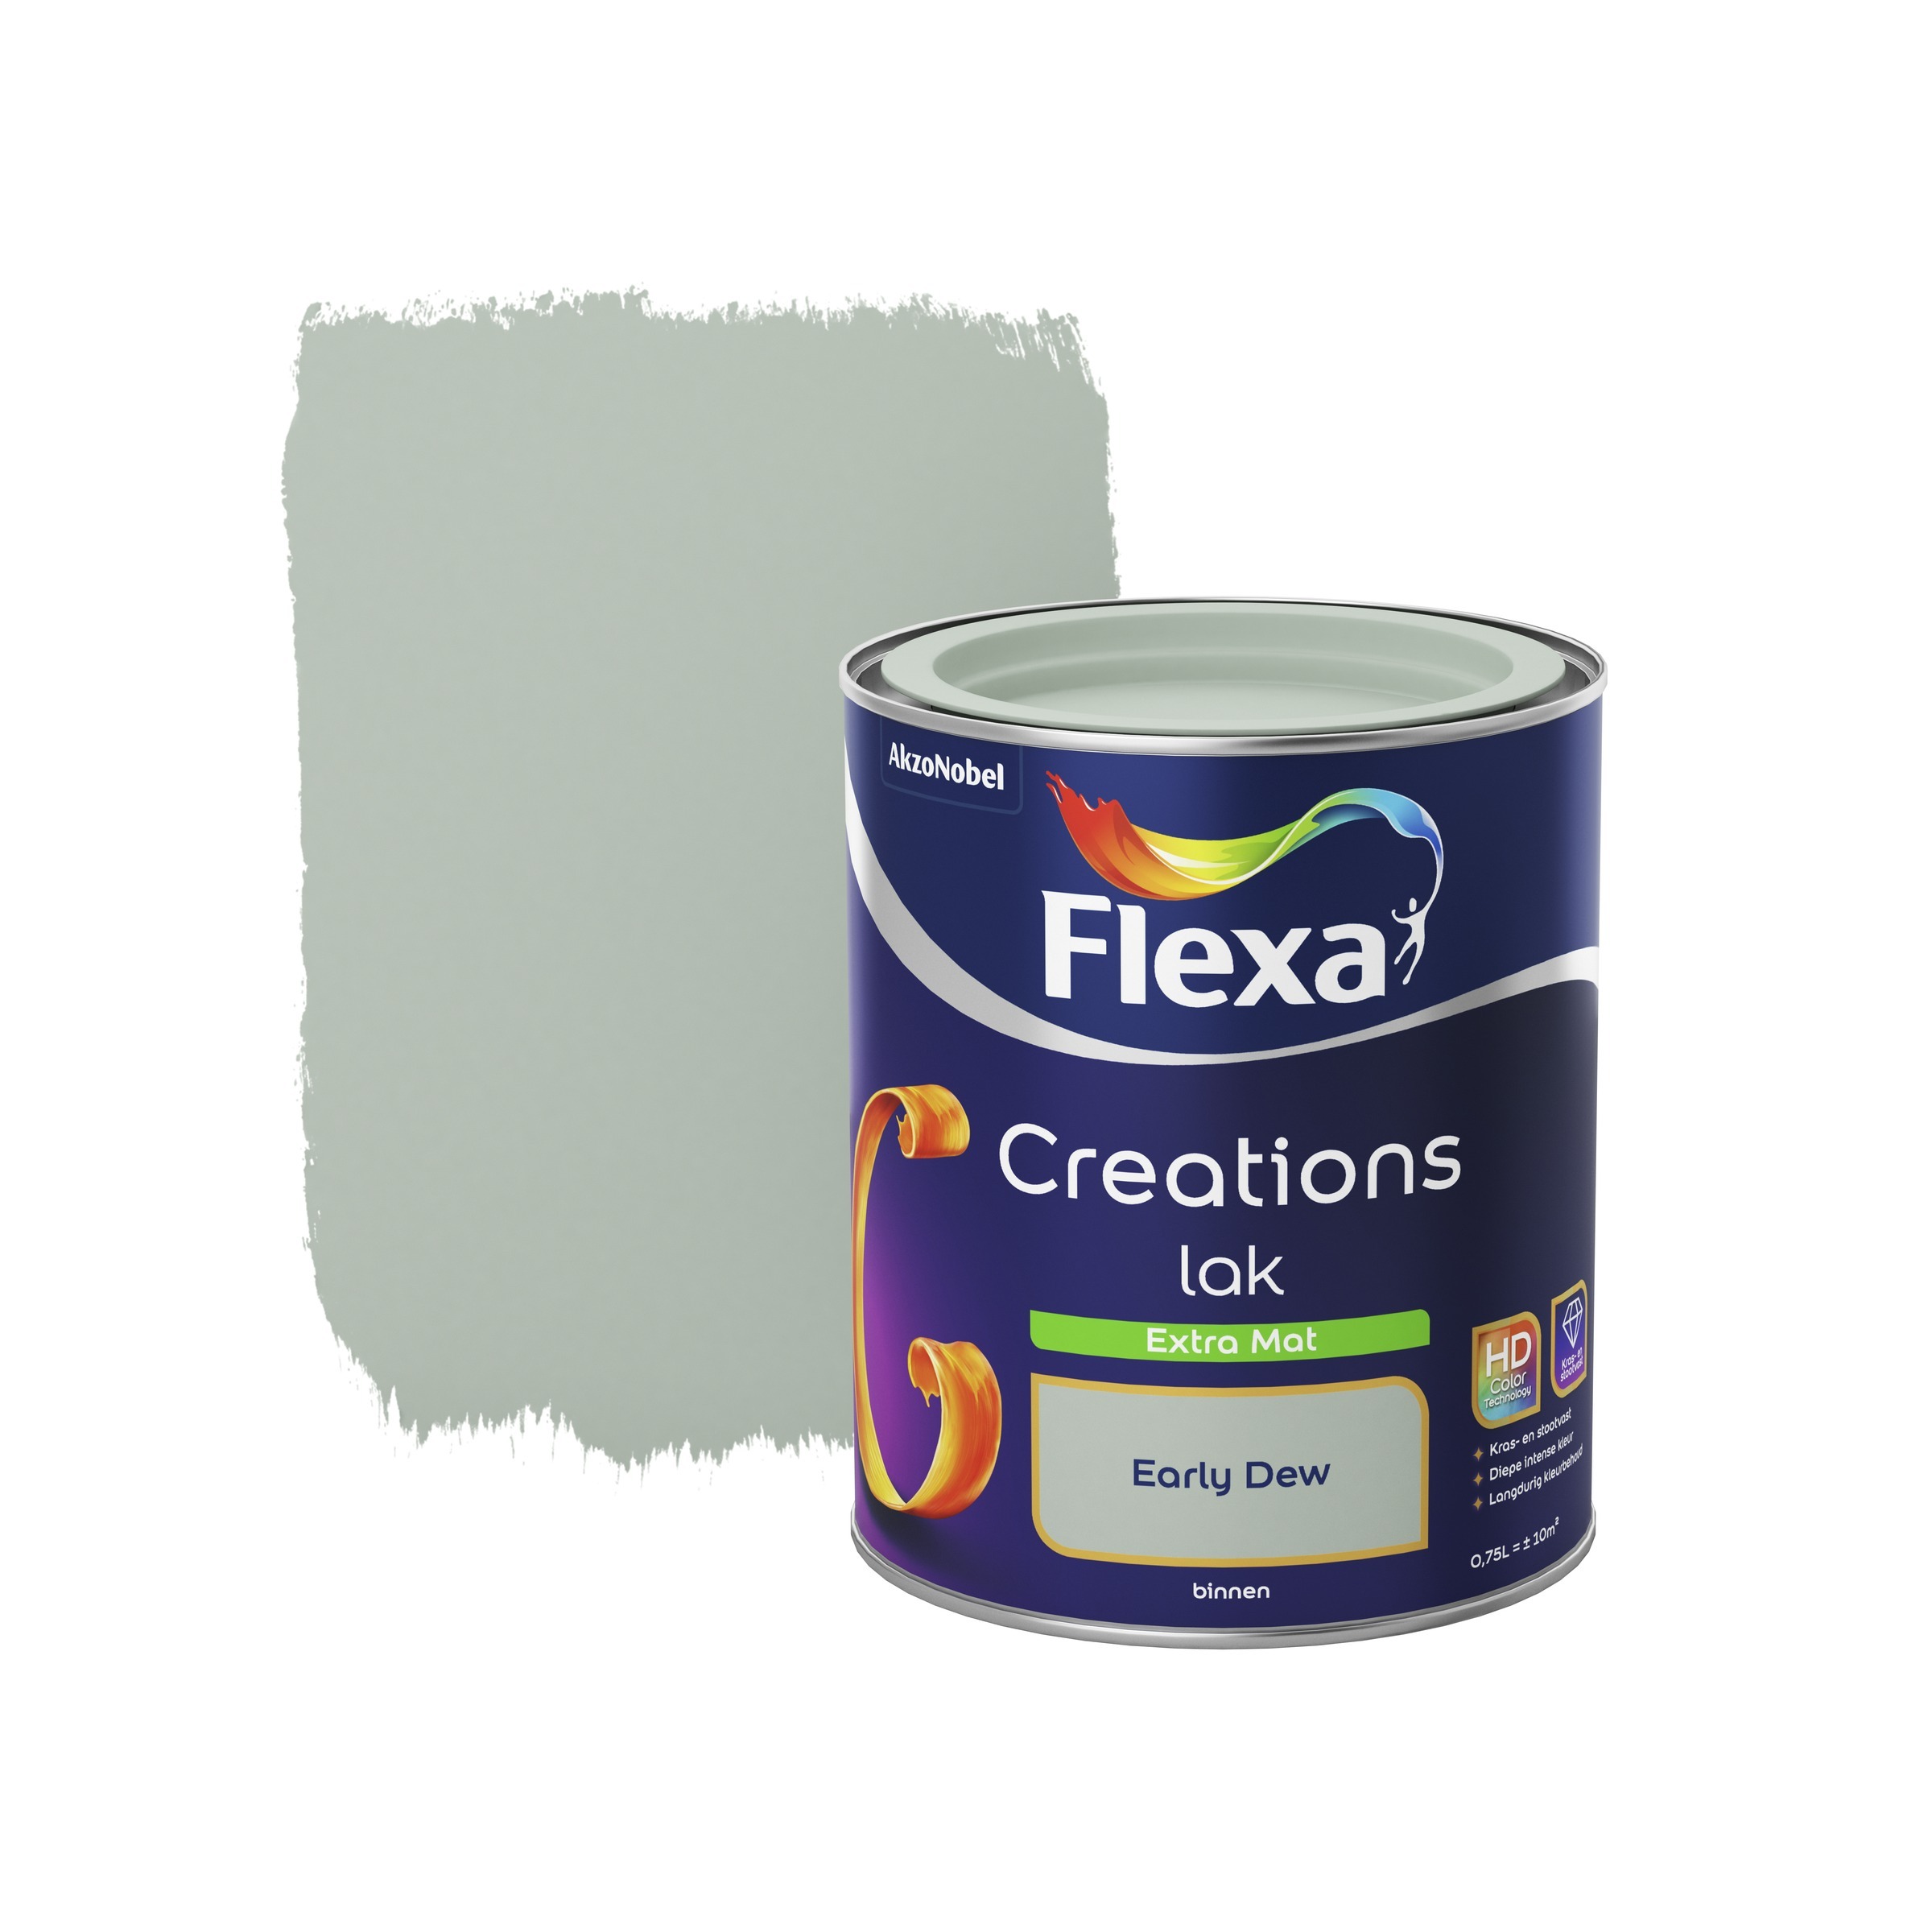 FLEXA Creations binnenlak early dew extra mat 750 ml